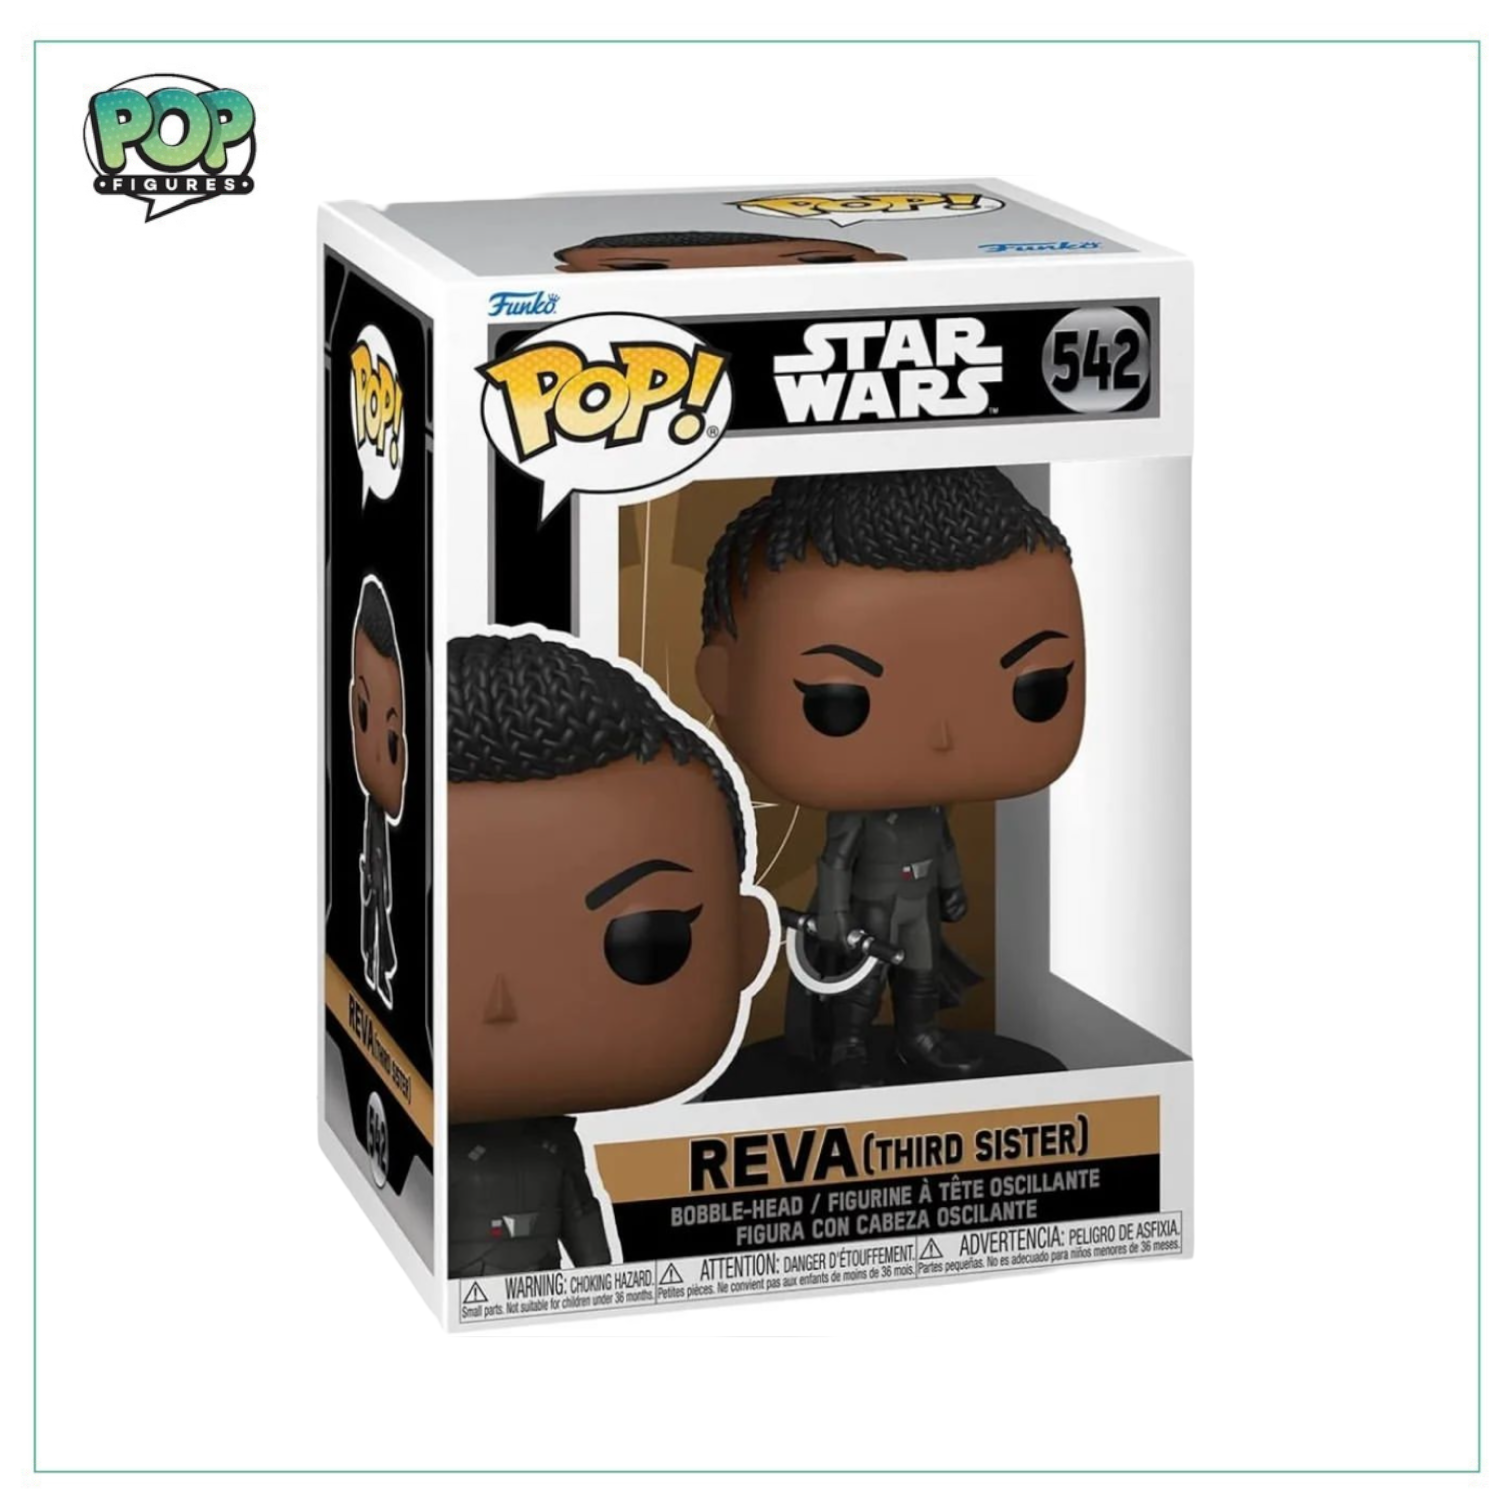 Reva (Third Sister) #542 Funko Pop! Star Wars : Obi-Wan Kenobi